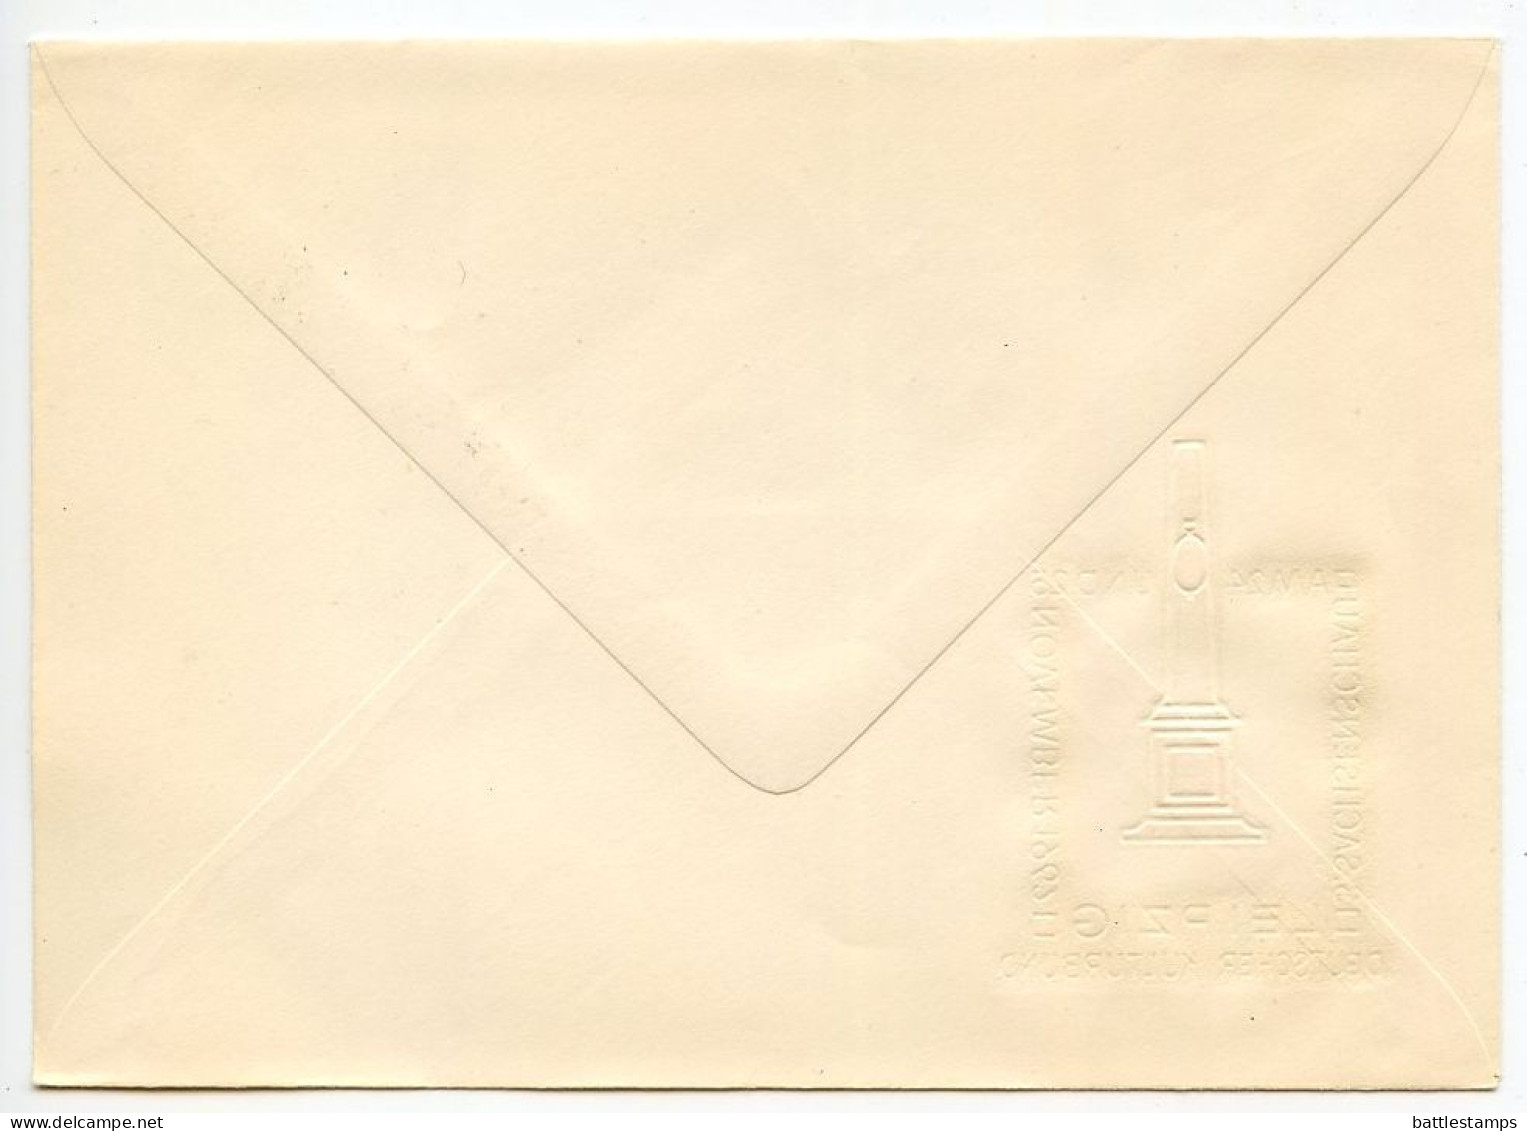 Germany, East 1962 10pf. Wartburg Postal Envelope; Leipzig 3. Sachsenschau Postmark & Cachet - Covers - Used